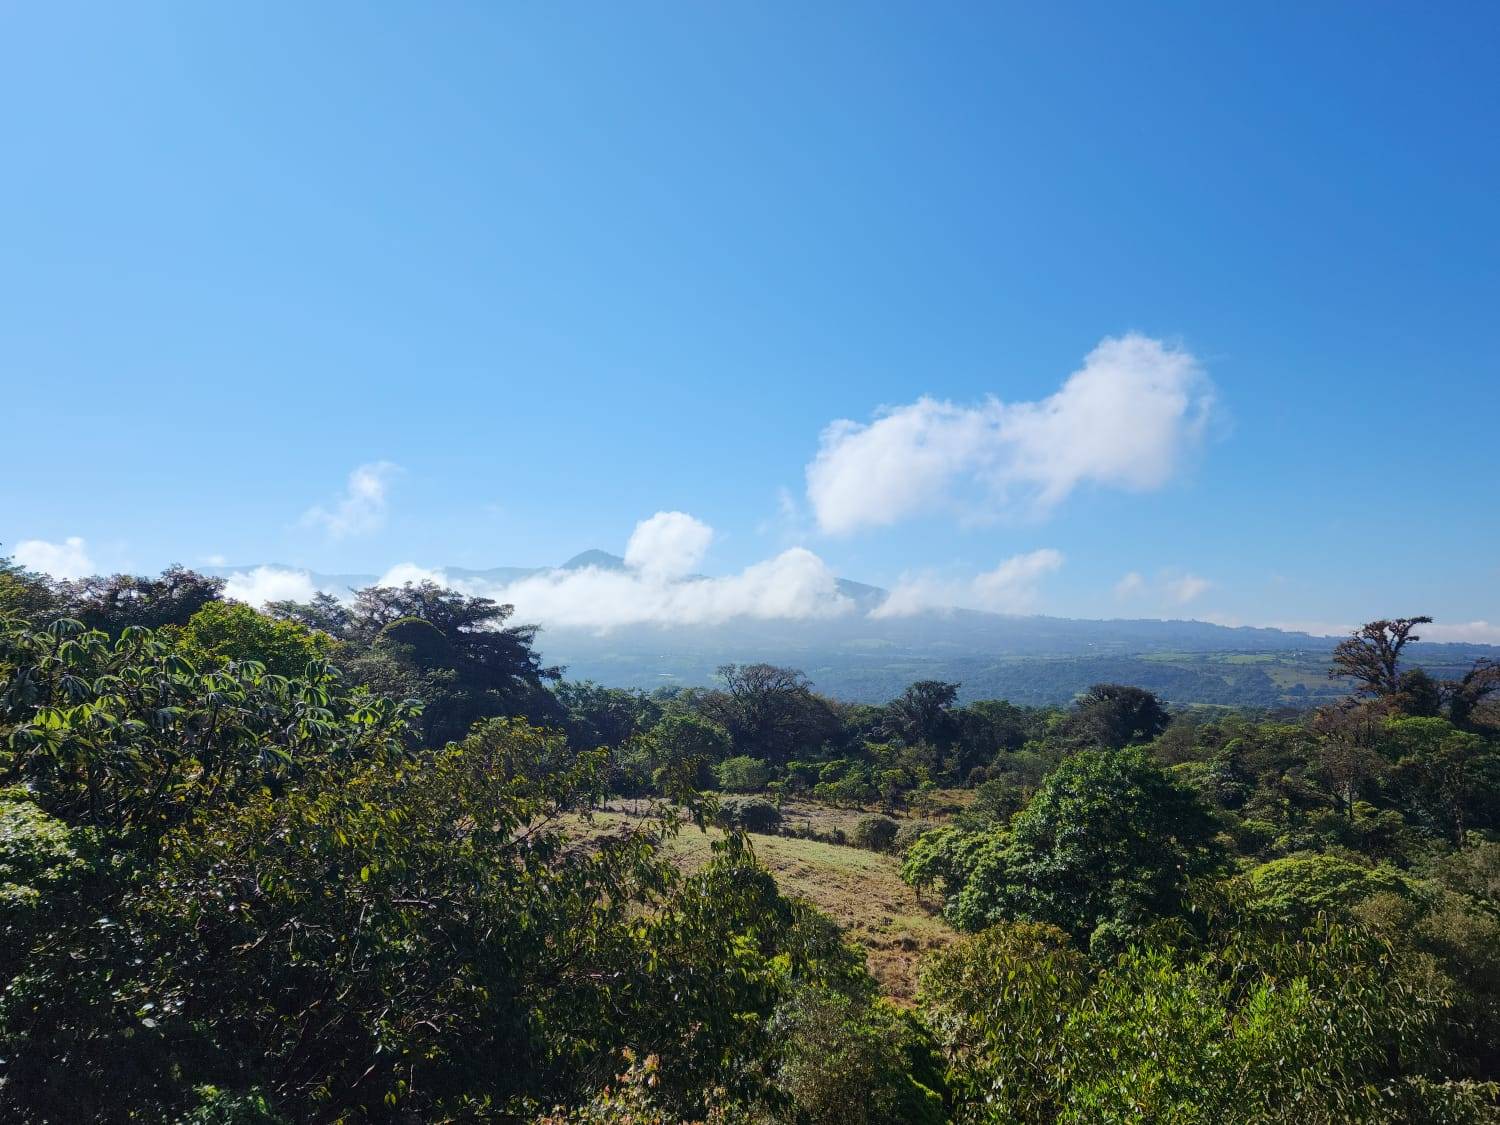 Prime 18.5-Hectare Land in Vasquez de Coronado, Alto Las Palmas, Costa Rica: Unleash Your Vision for a Spectacular Resort or Residential Development!